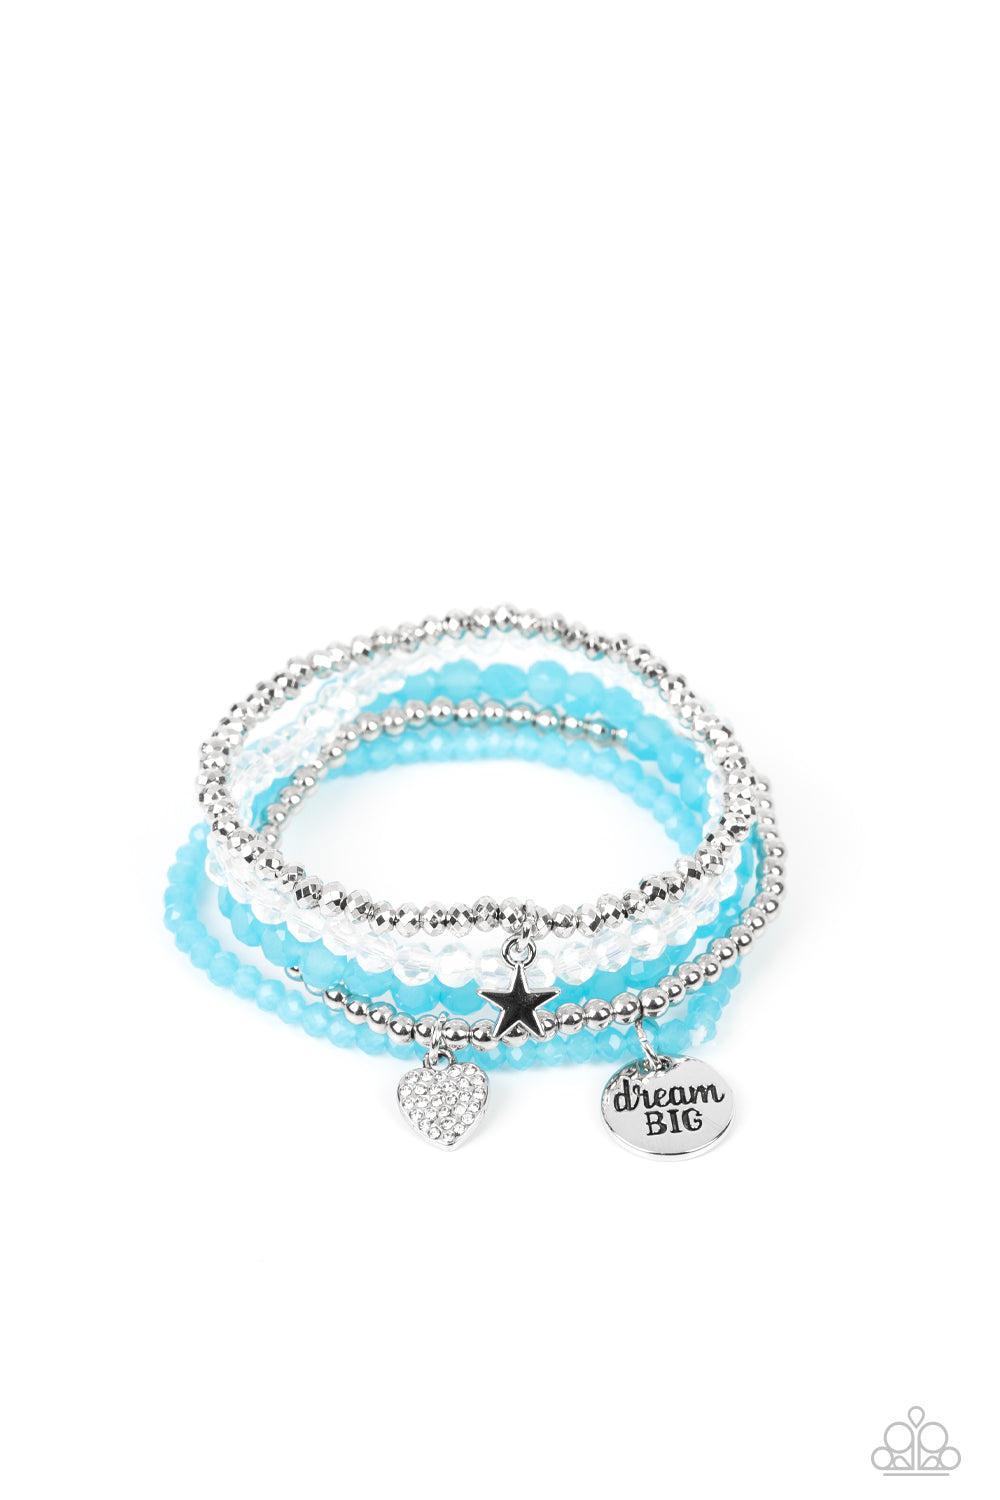 Teenage DREAMER Blue Inspirational Bracelet - Paparazzi Accessories- lightbox - CarasShop.com - $5 Jewelry by Cara Jewels